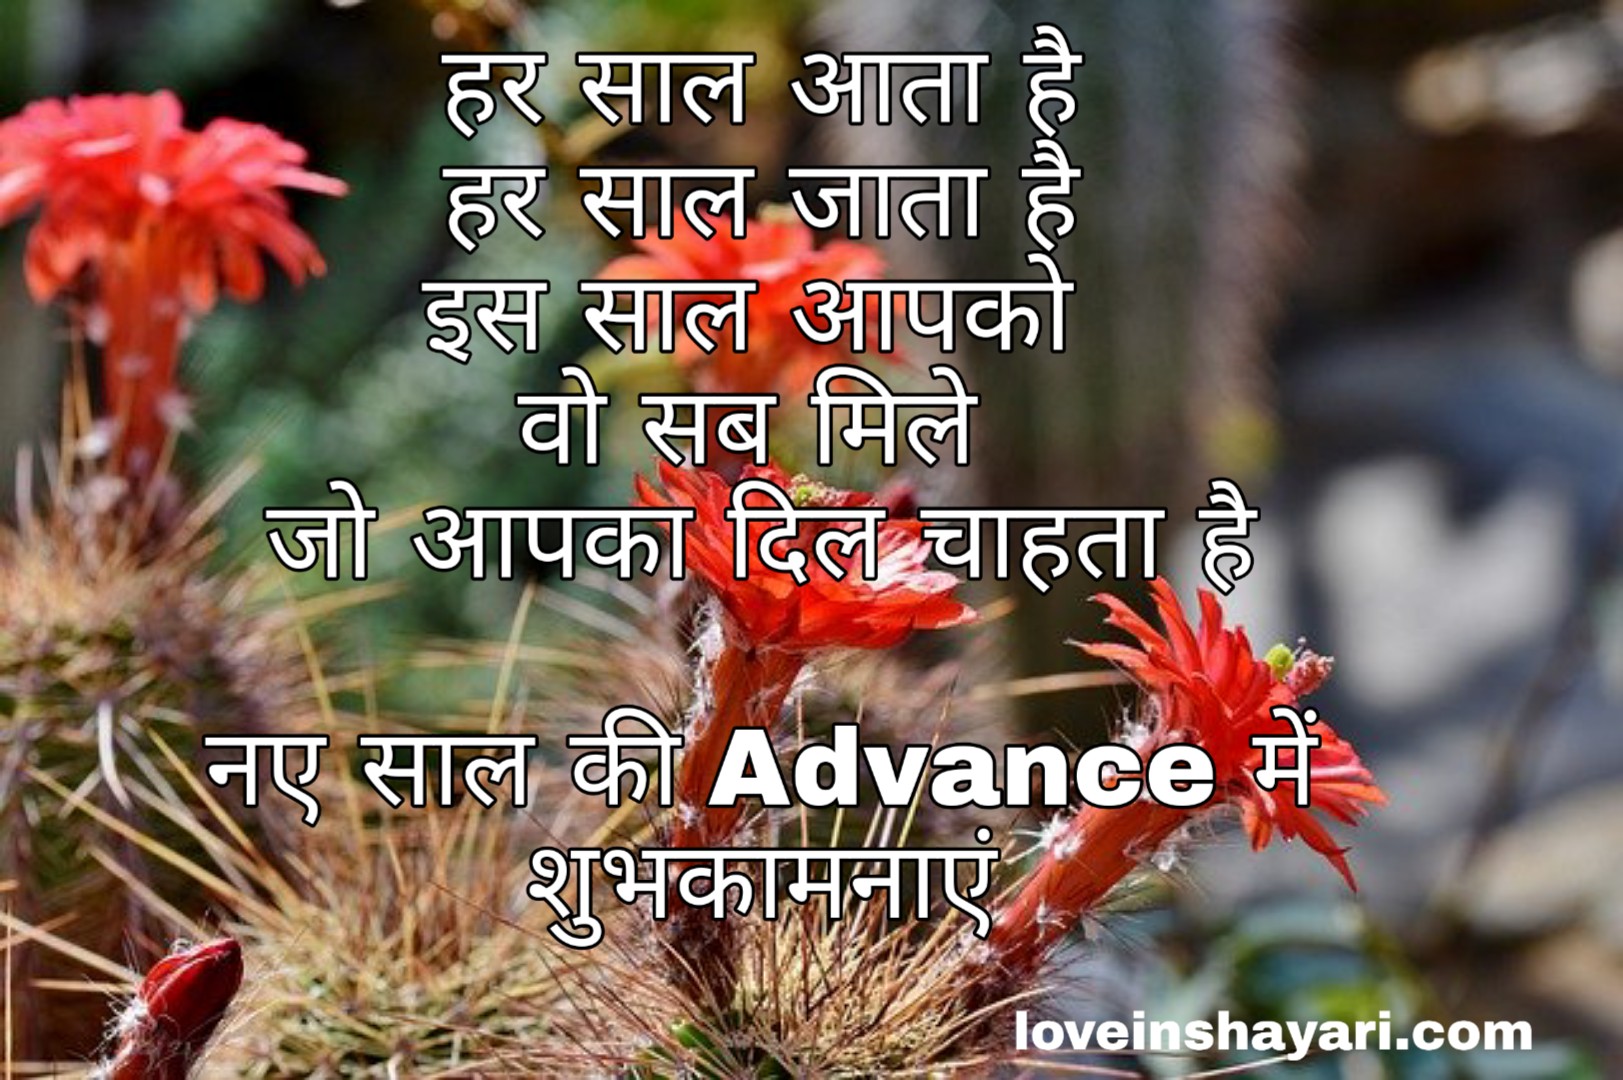 Advance happy new year 2020 image shayari and sms » Love In Shayari